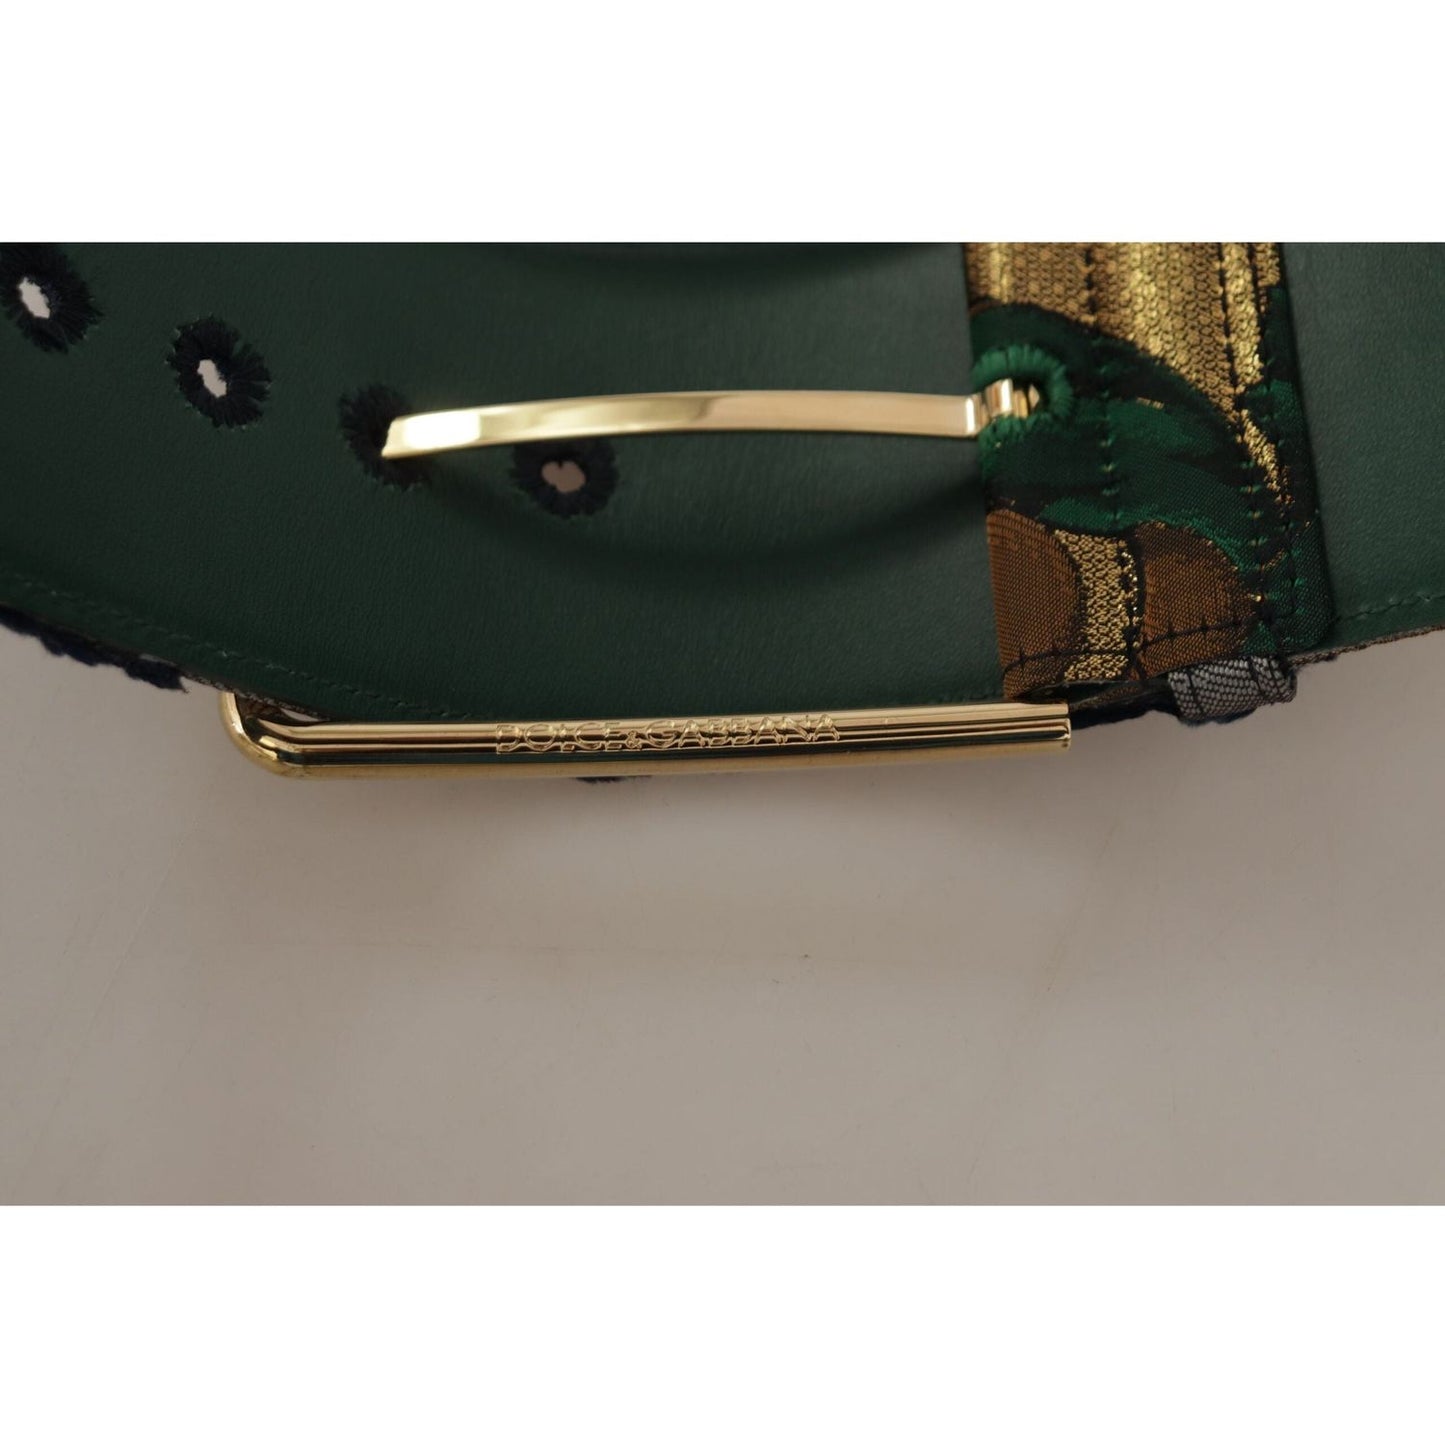 Dolce & Gabbana Elegant Green Leather Belt with Logo Buckle green-jacquard-embroid-leather-gold-metal-buckle-belt